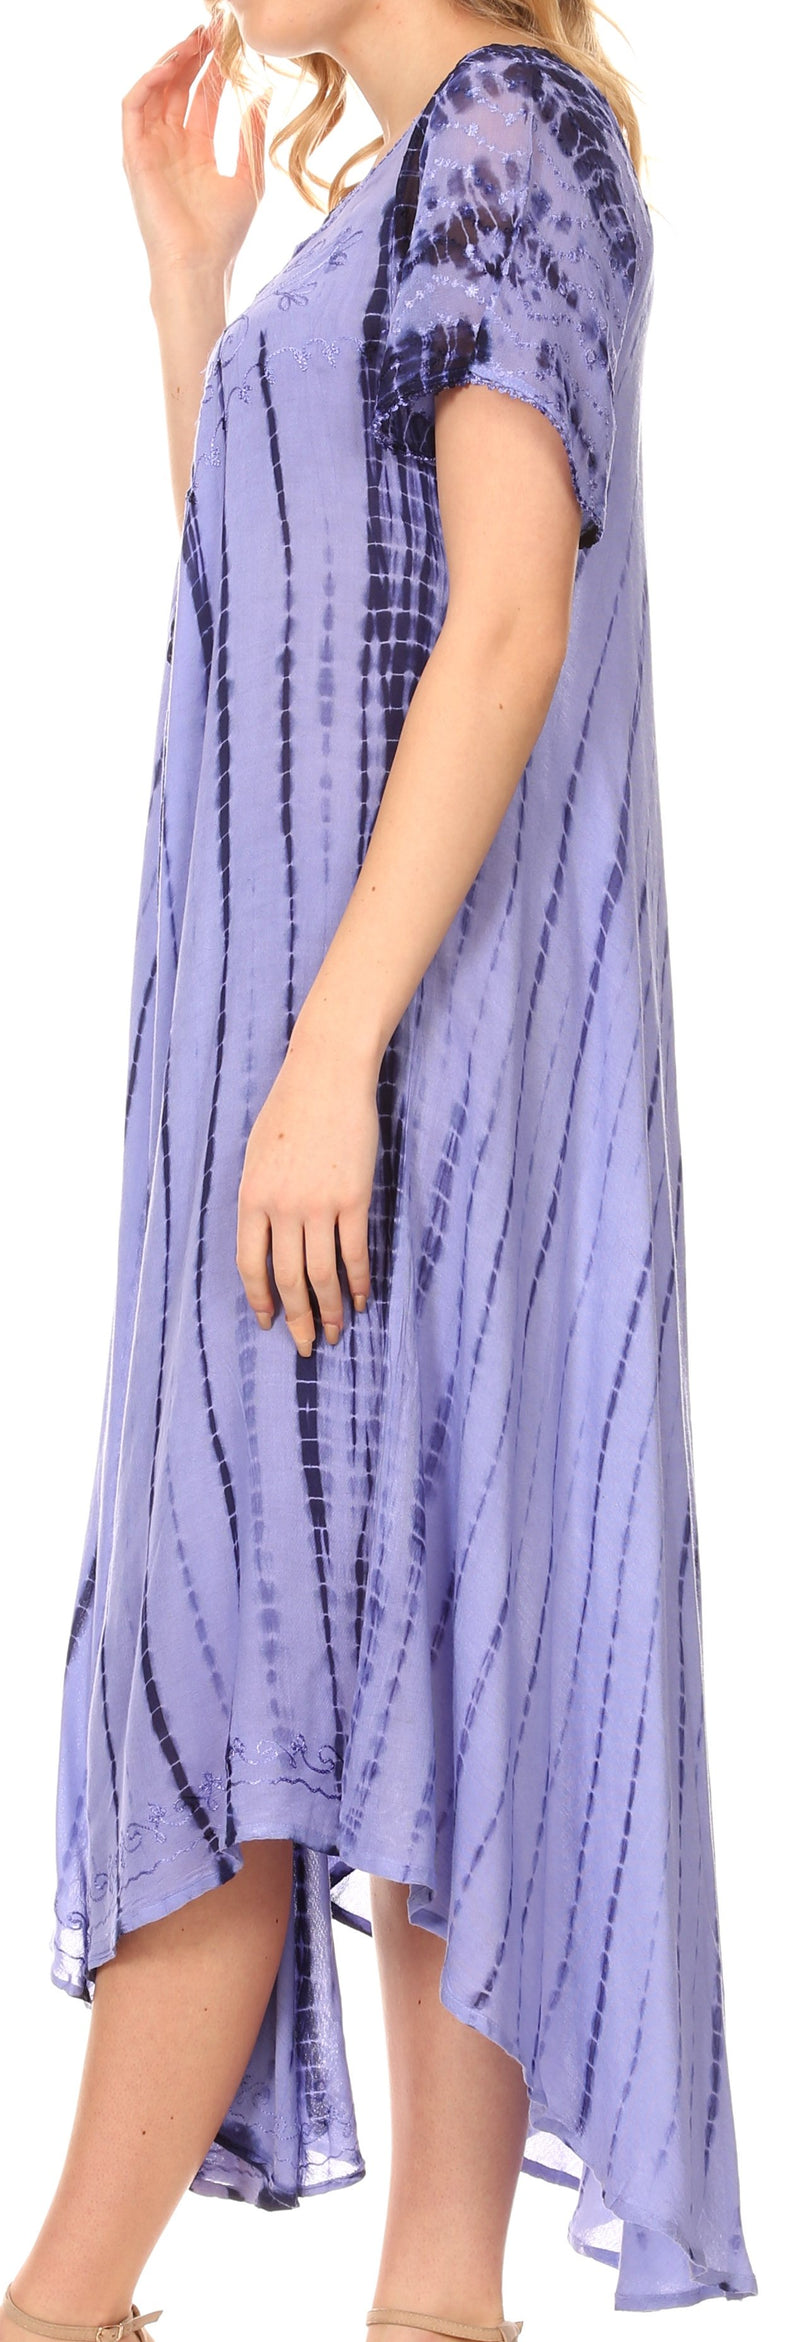 Sakkas Yasmin Tie Dye Embroidered Sheer Cap Sleeve Sundress | Cover Up